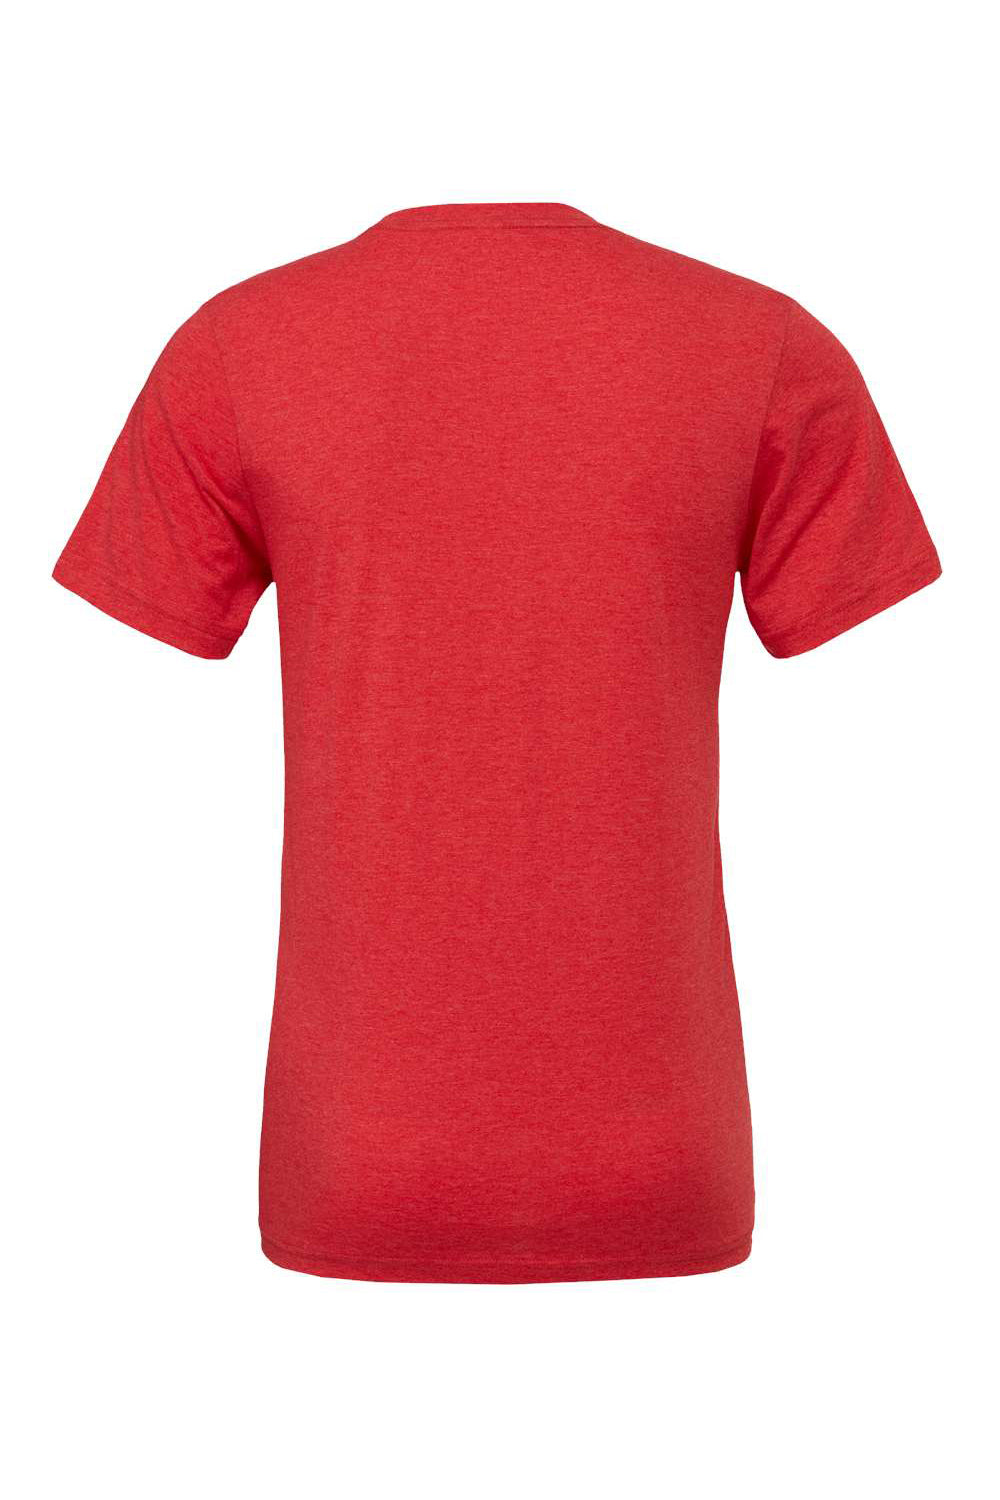 Bella + Canvas BC3413/3413C/3413 Mens Short Sleeve Crewneck T-Shirt Red Flat Back